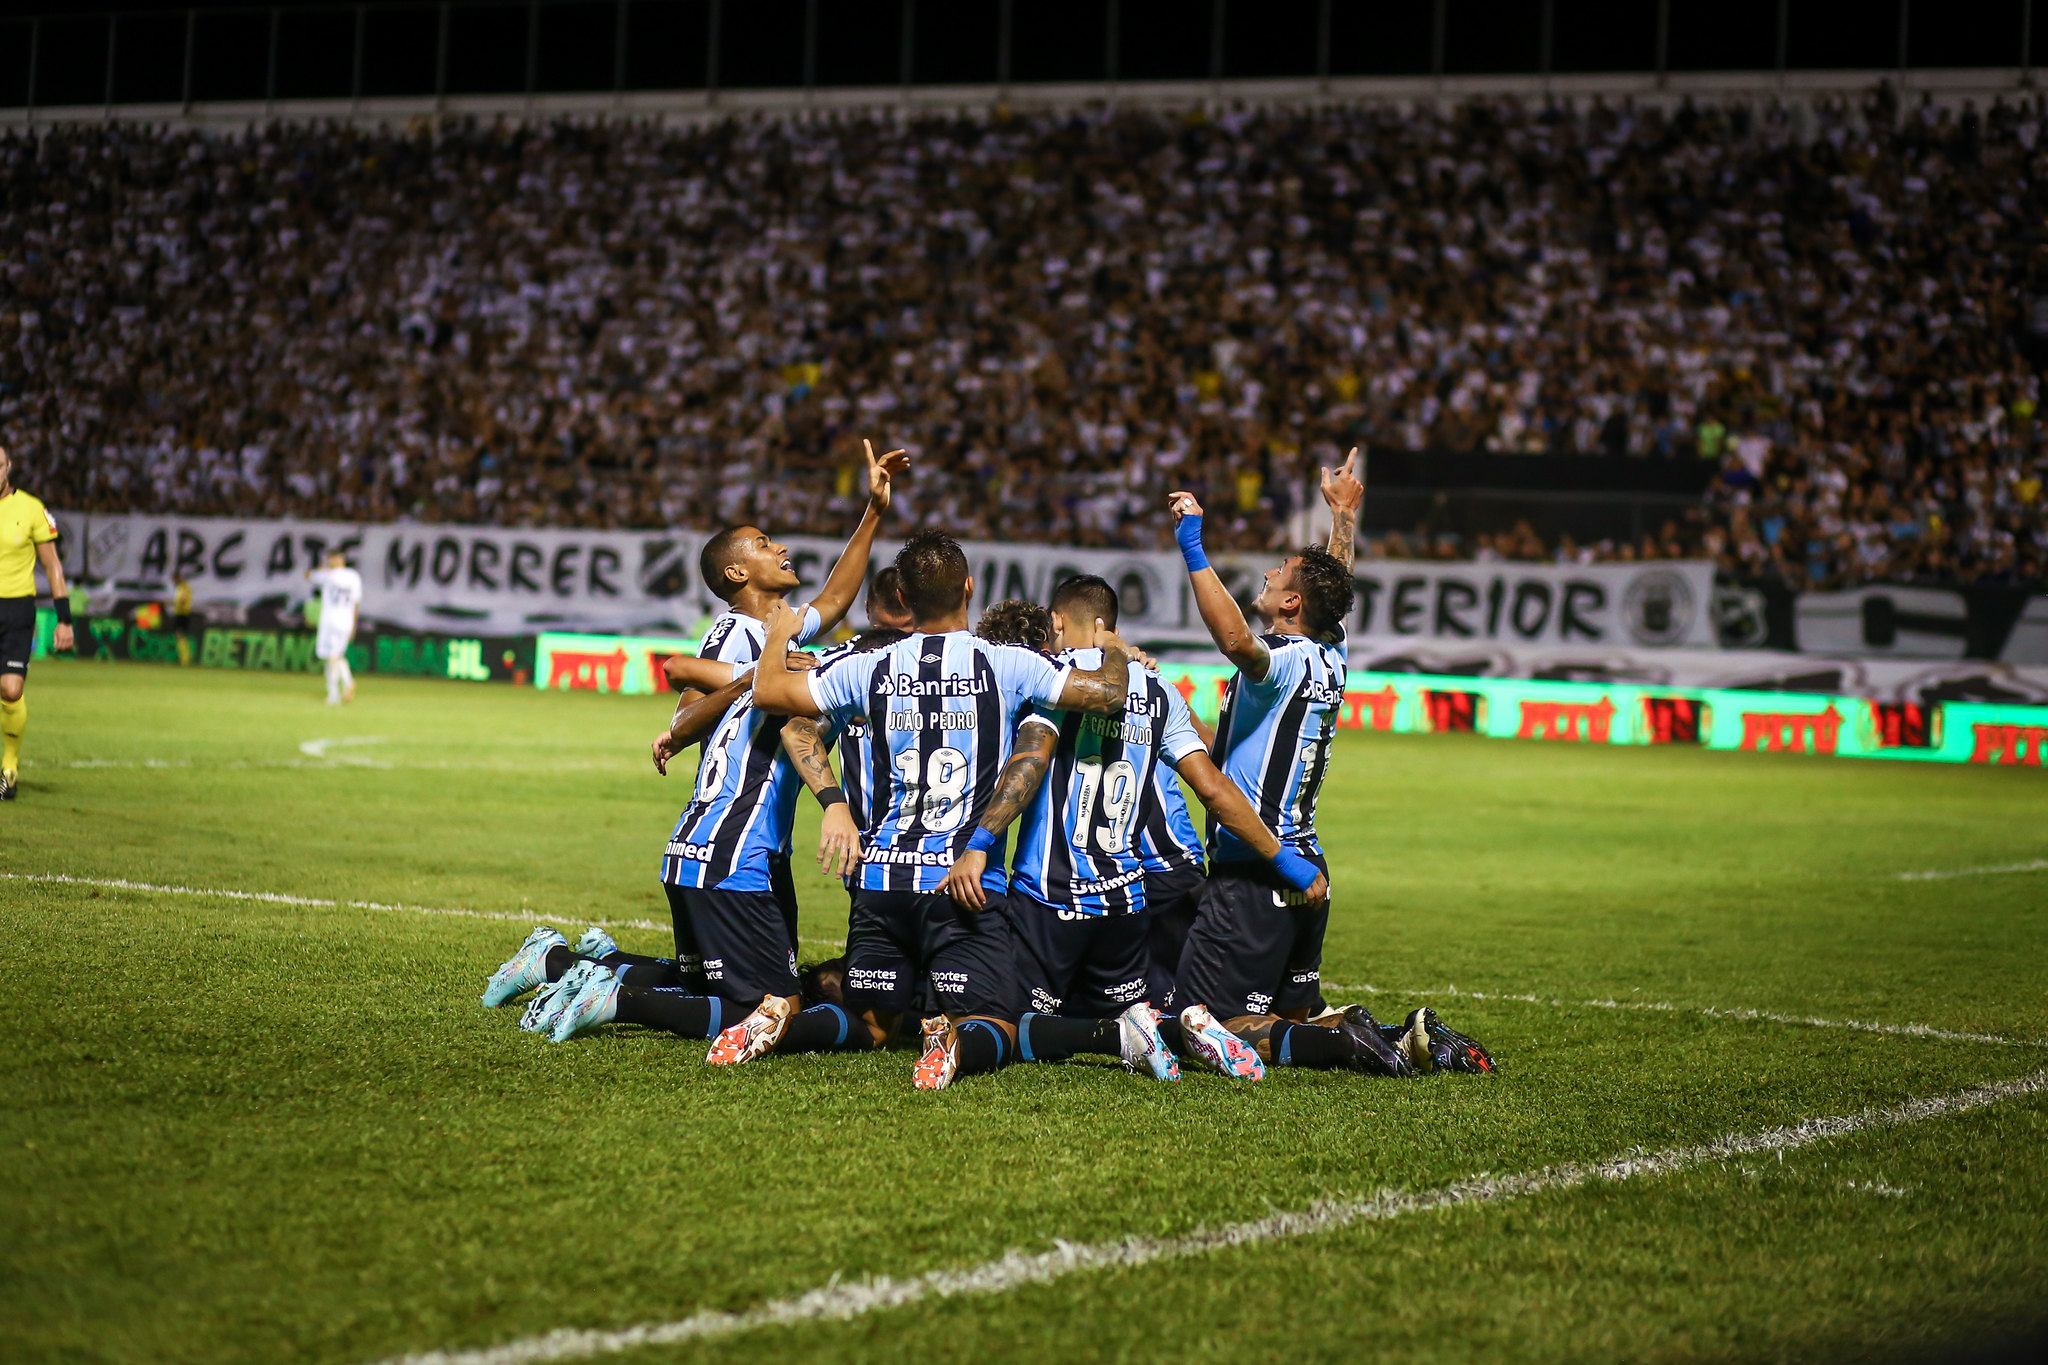 Grêmio vs. [Opponent]